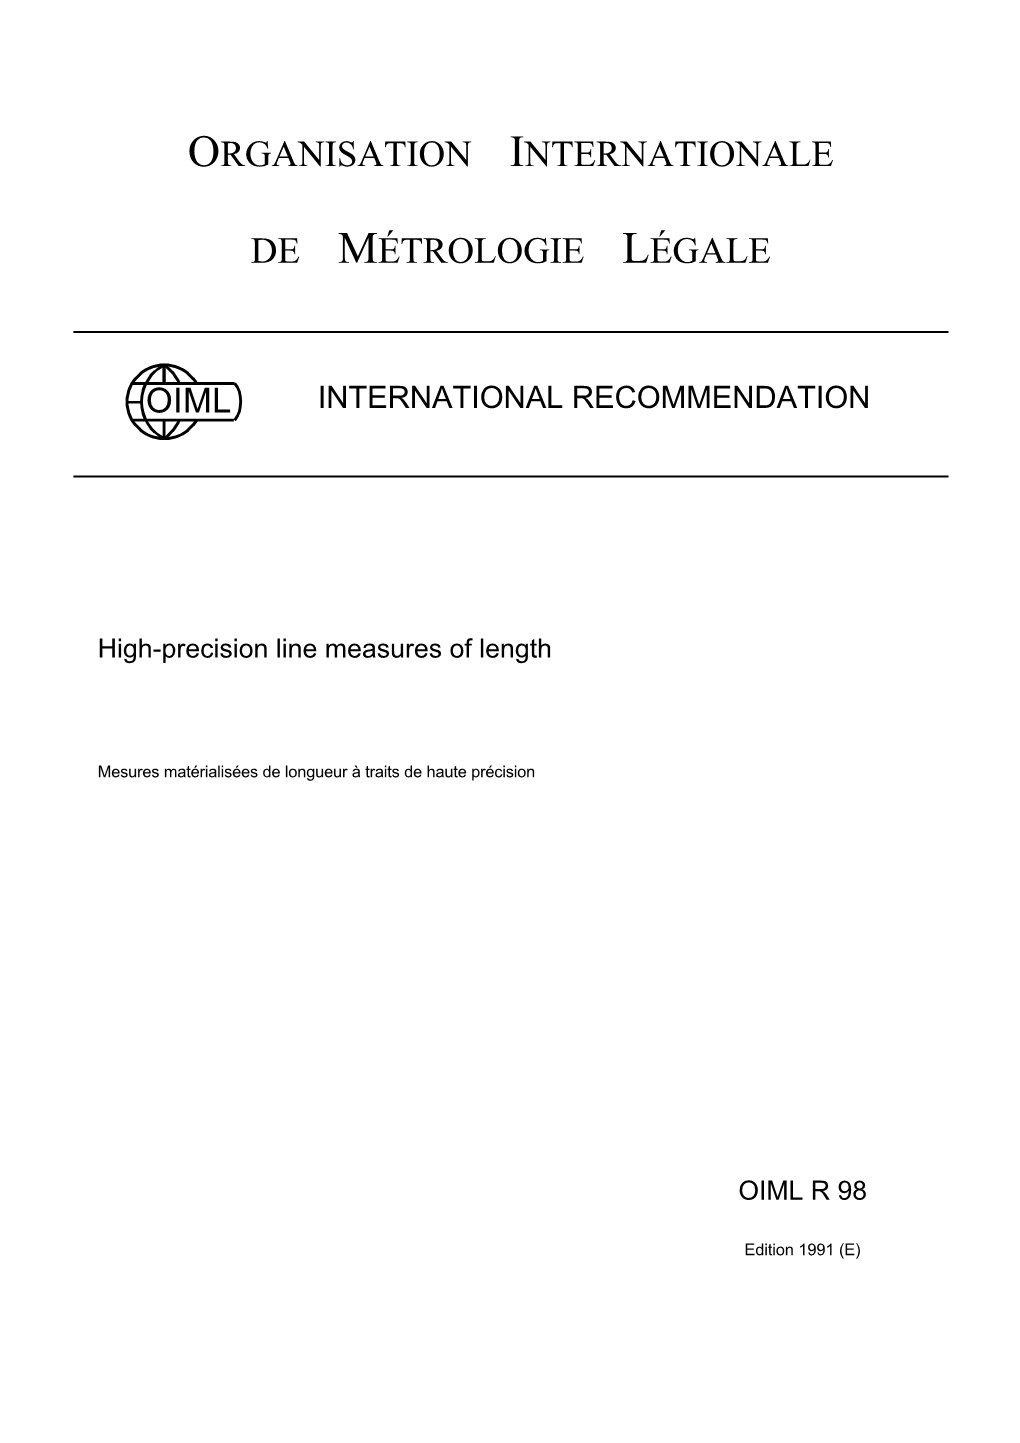 OIML R 98 (E), Edition 1991